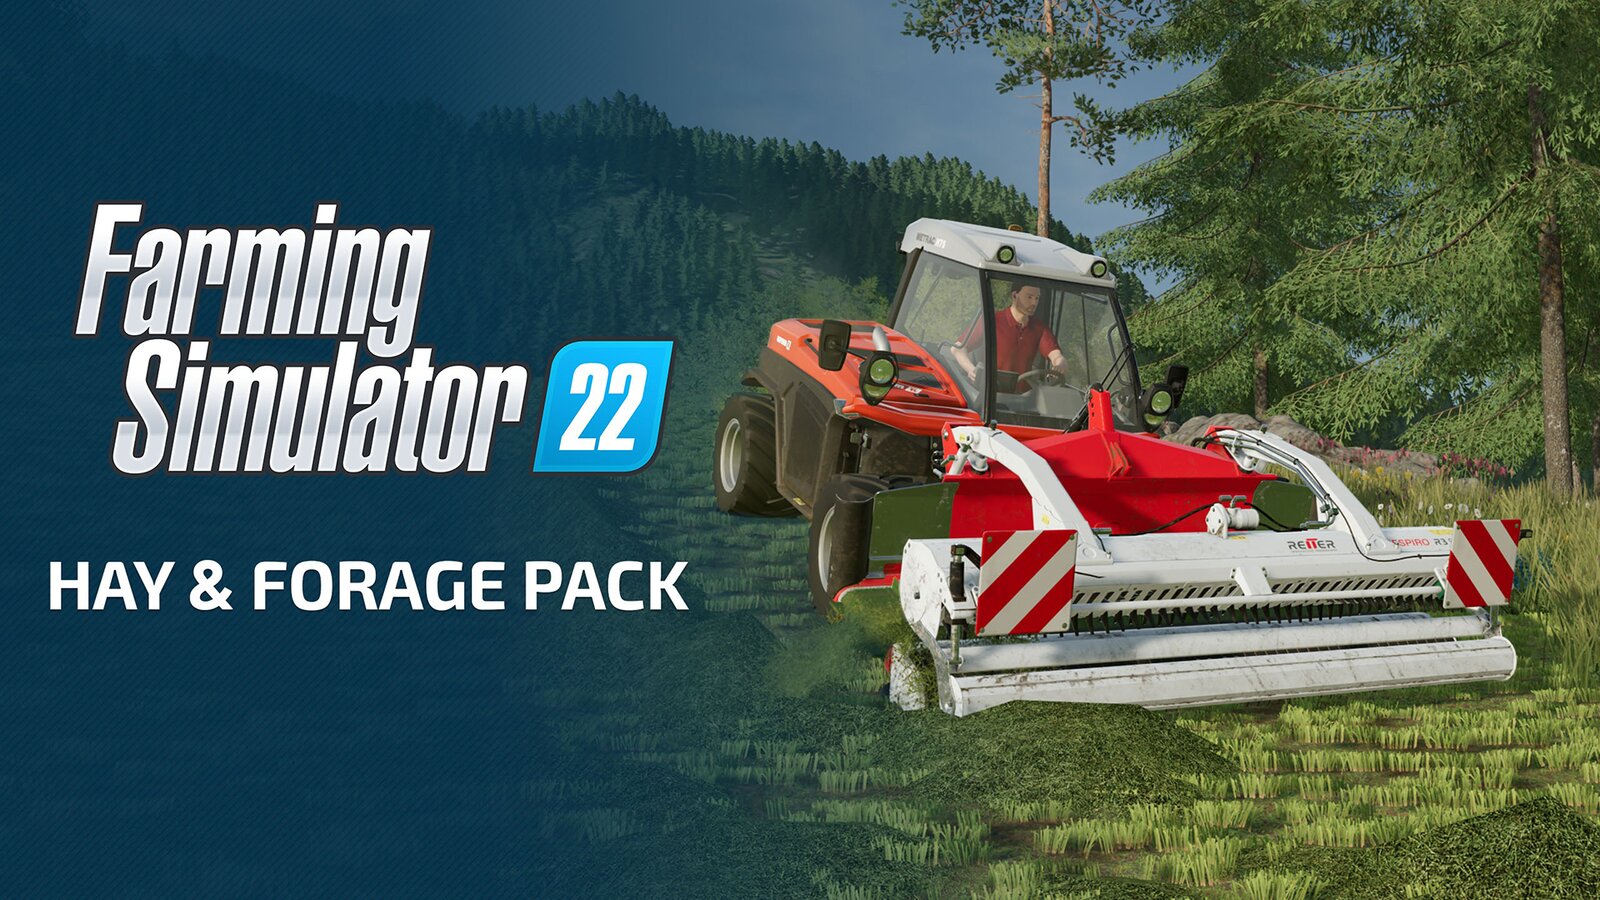 Farming Simulator 22 - Hay & Forage Pack